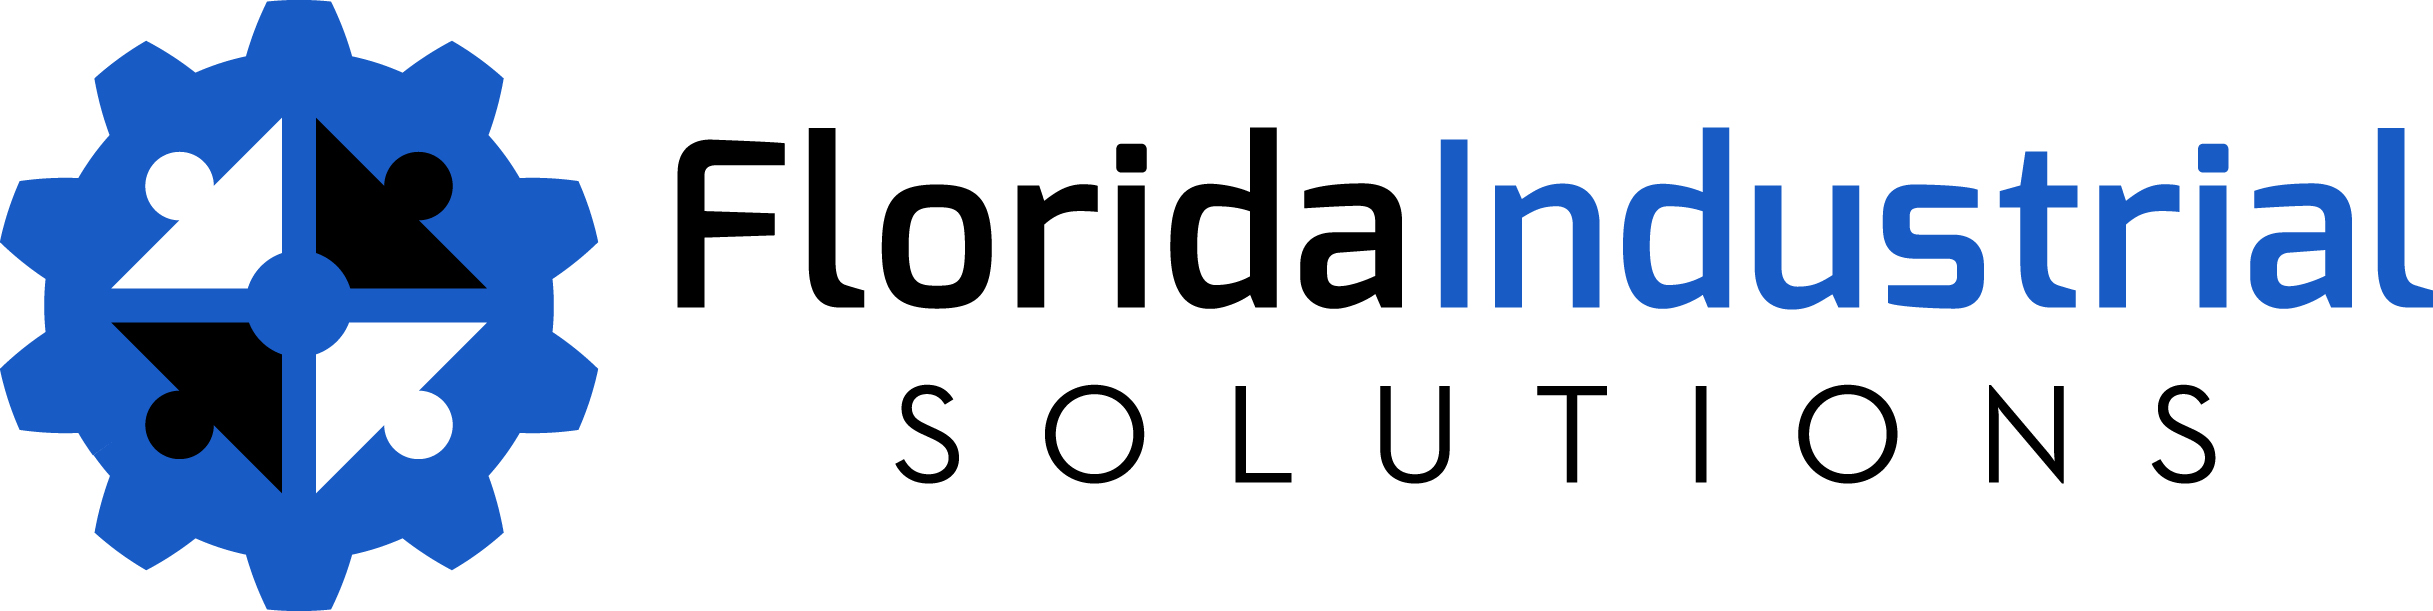 FLORIDA INDUSTRIAL SOLUTIONS's Logo